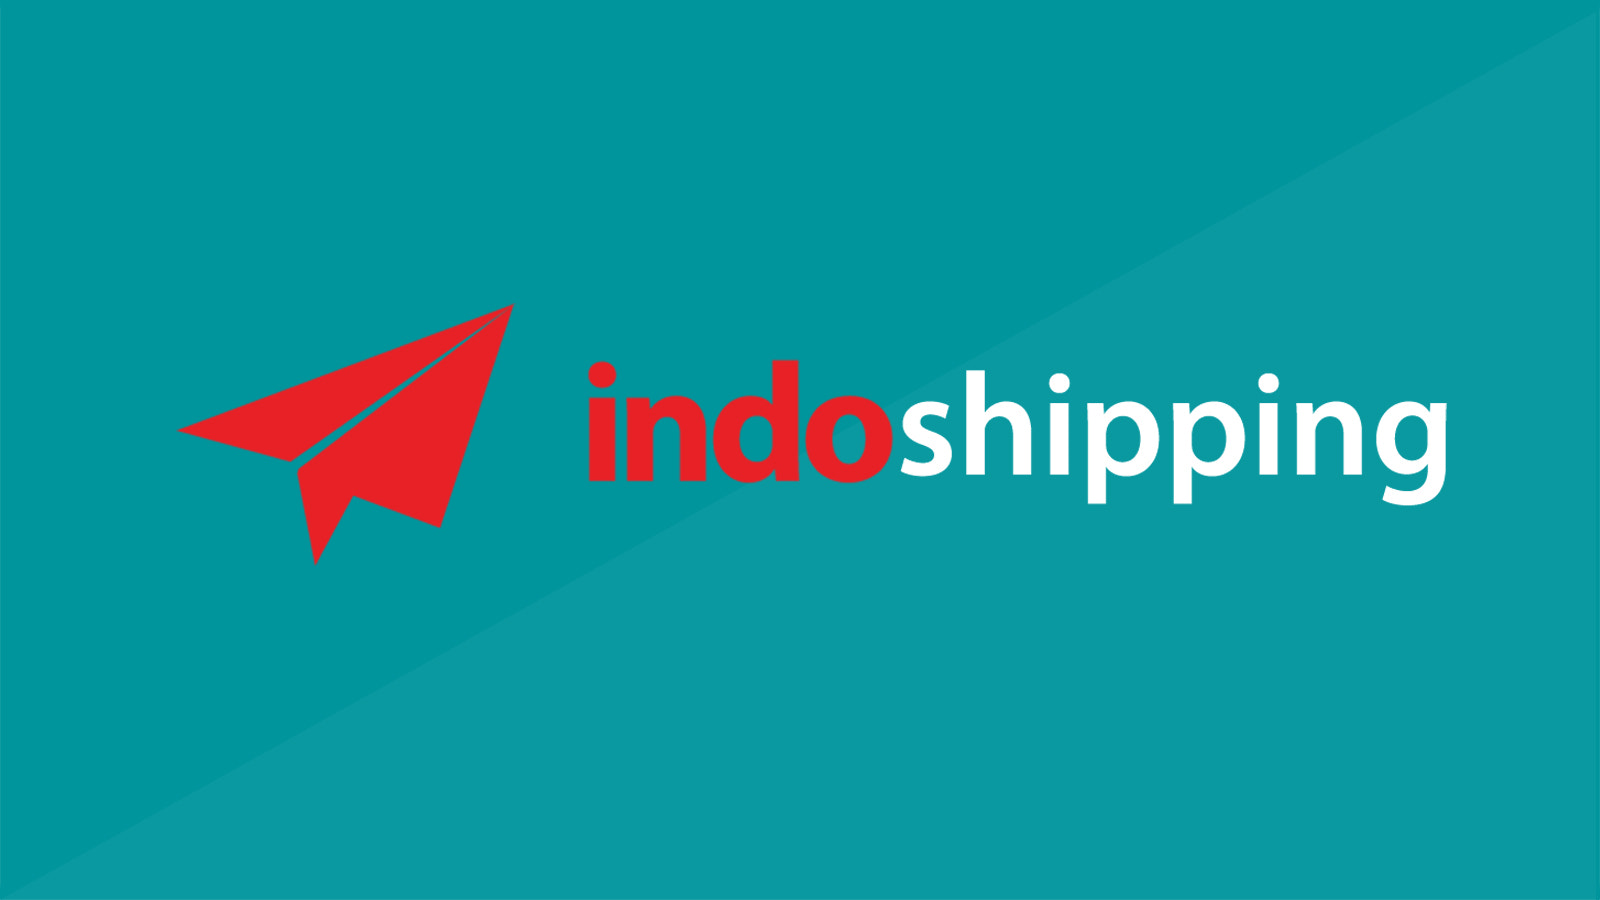 Indoshipping ongkir indonesia shipping